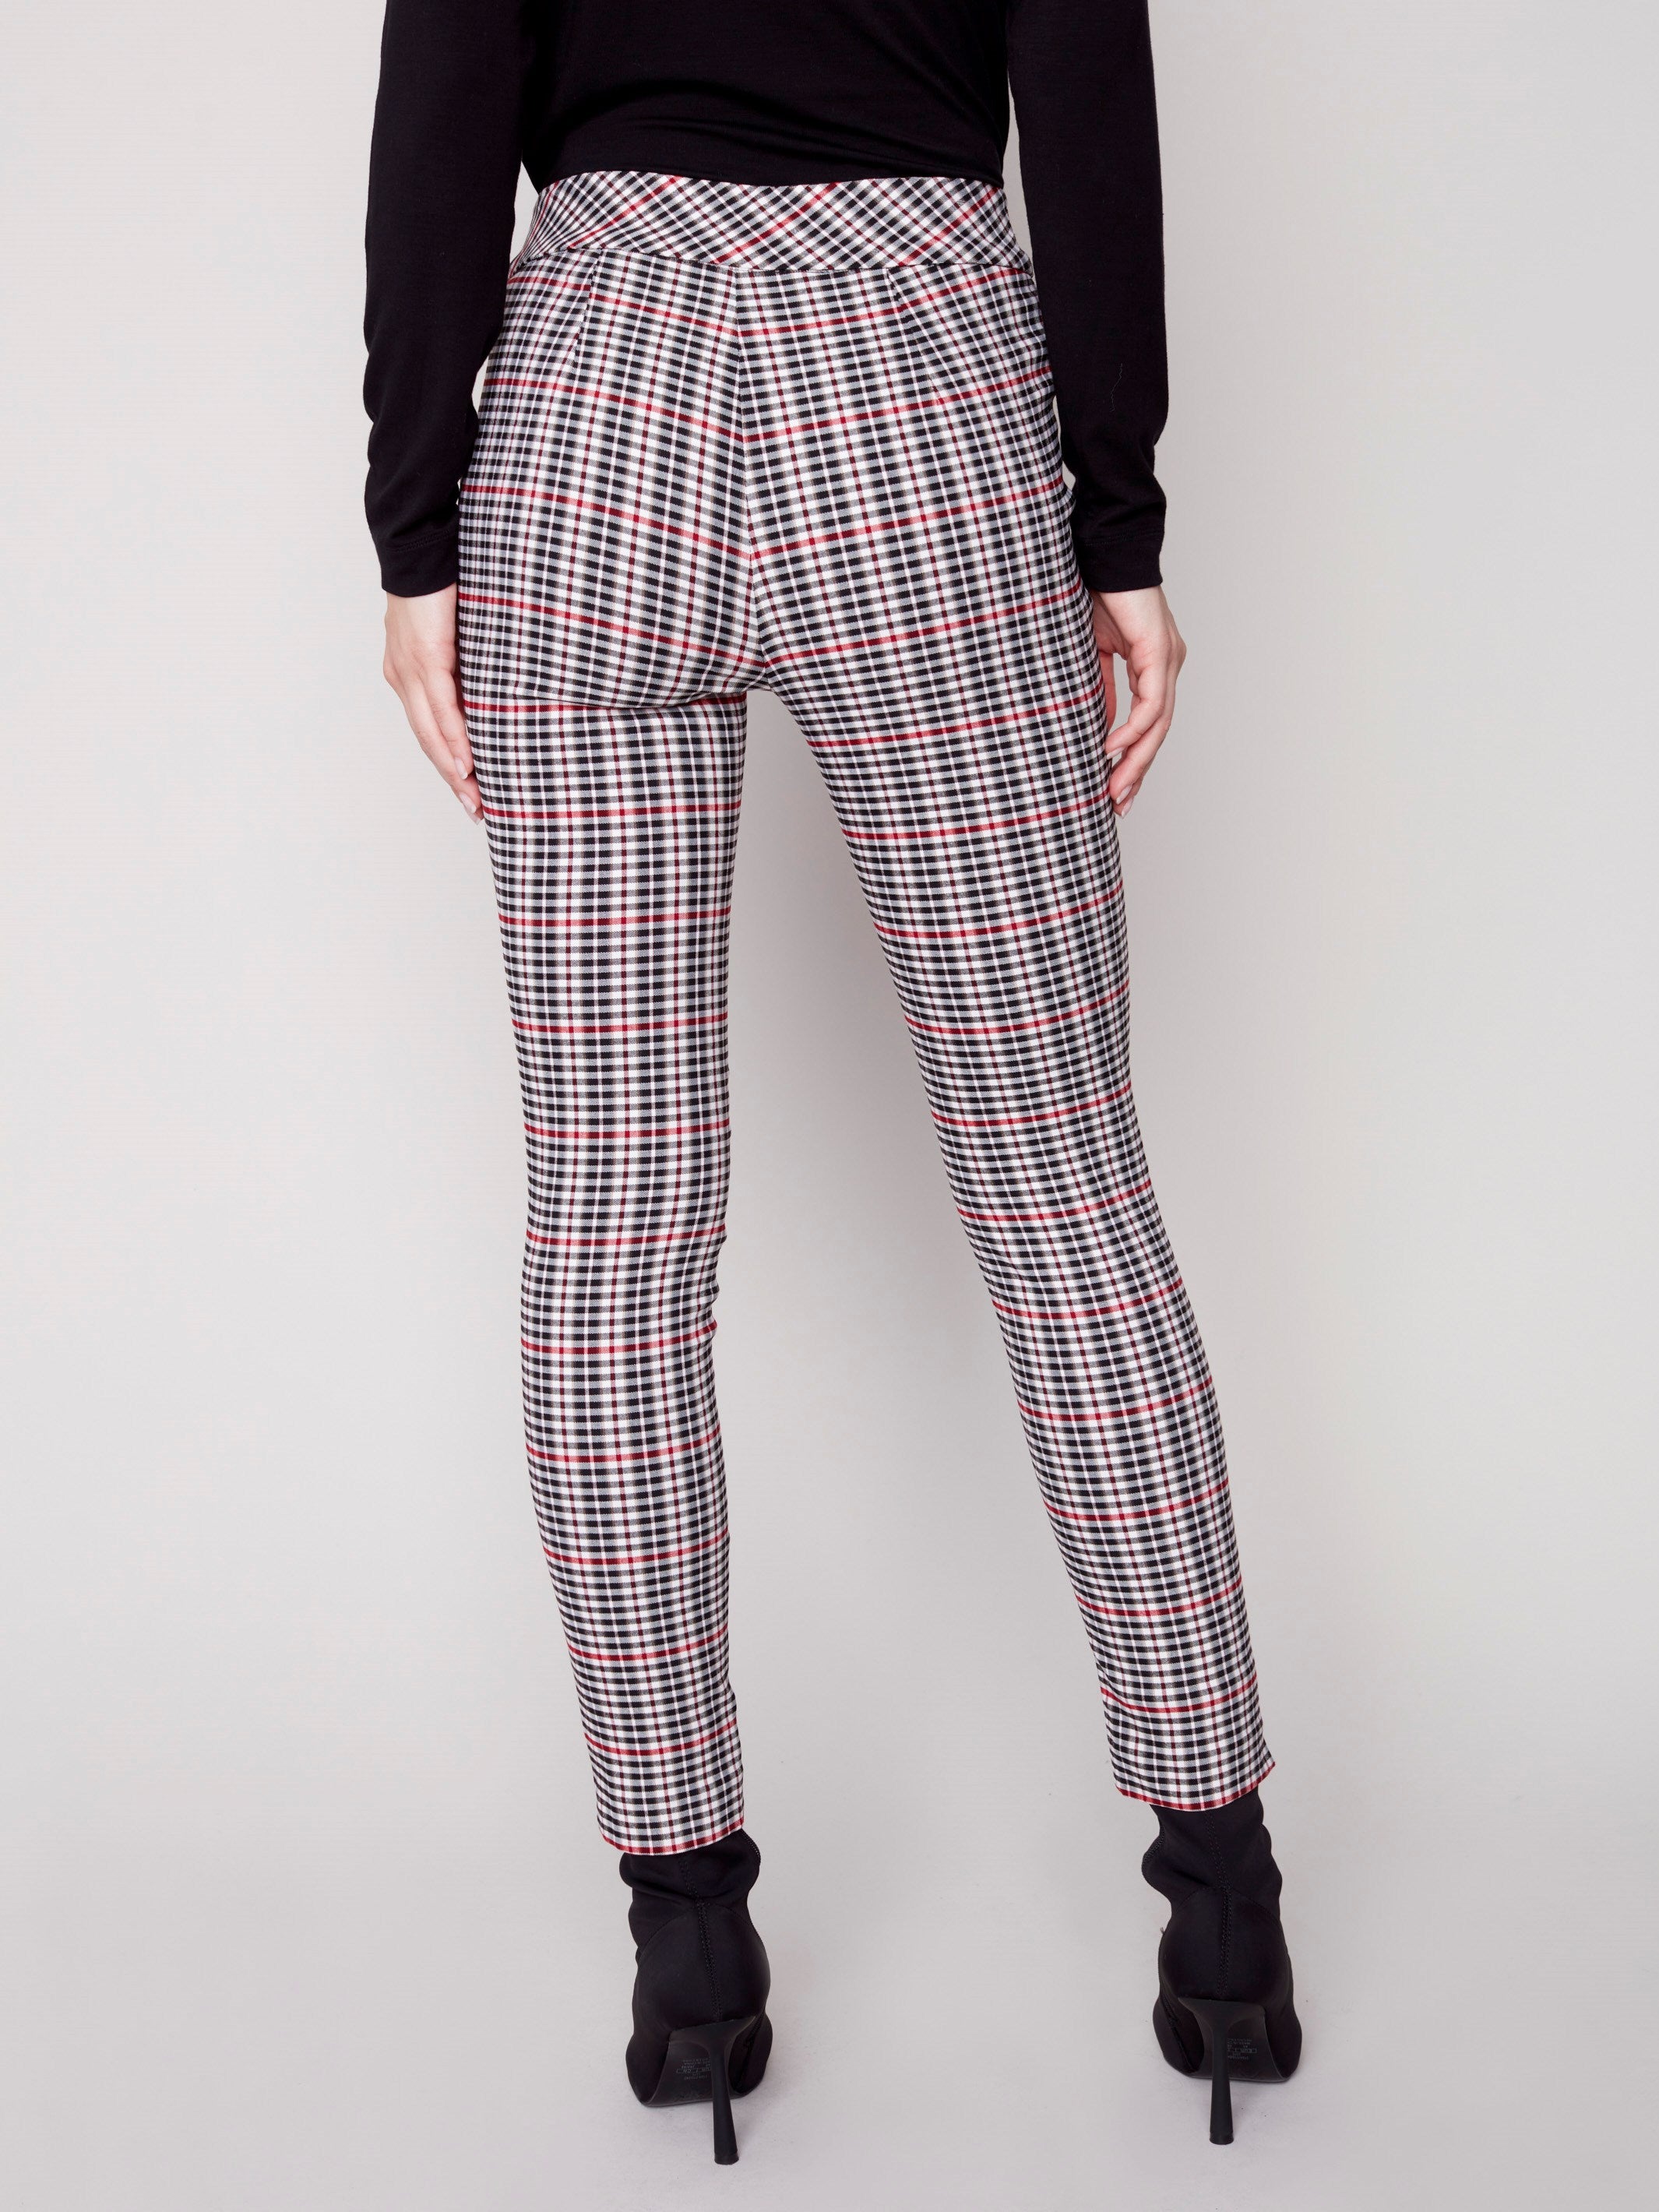 Pantalons motif tartan style fourreau - Rubis